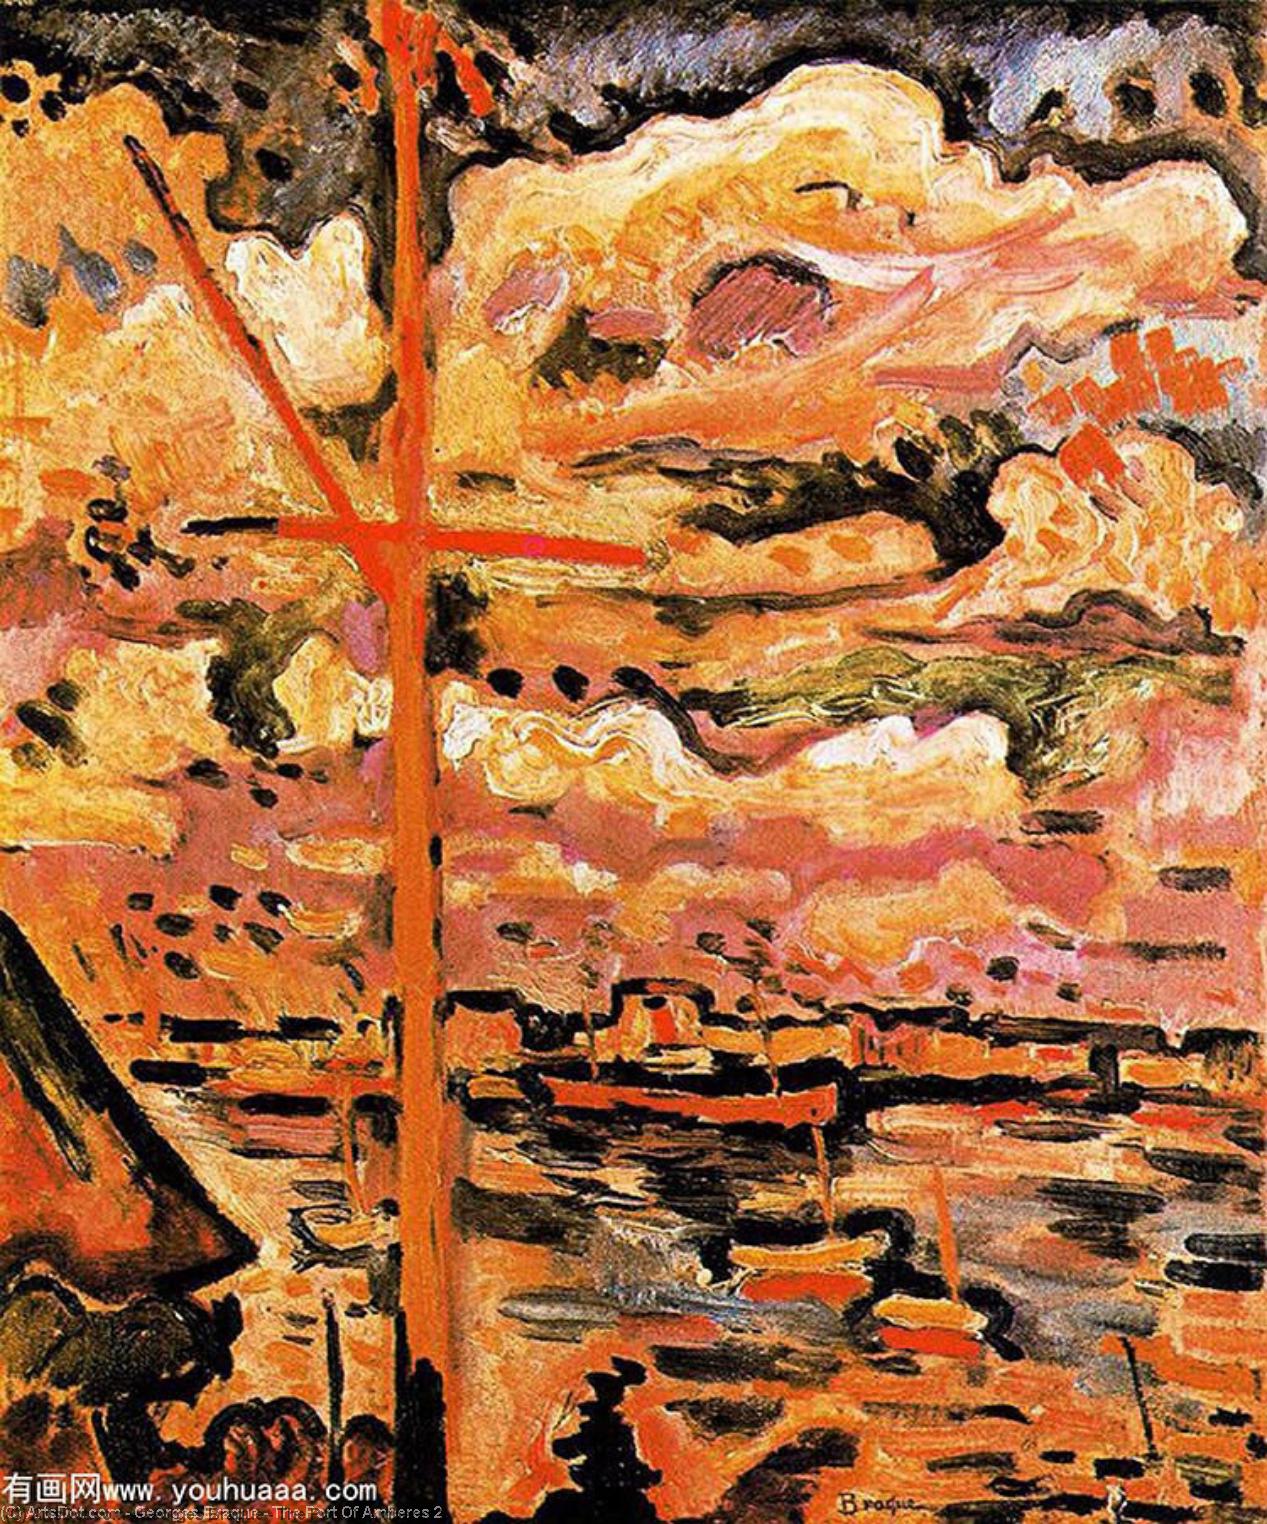 Wikoo.org - موسوعة الفنون الجميلة - اللوحة، العمل الفني Georges Braque - The Port Of Amberes 2